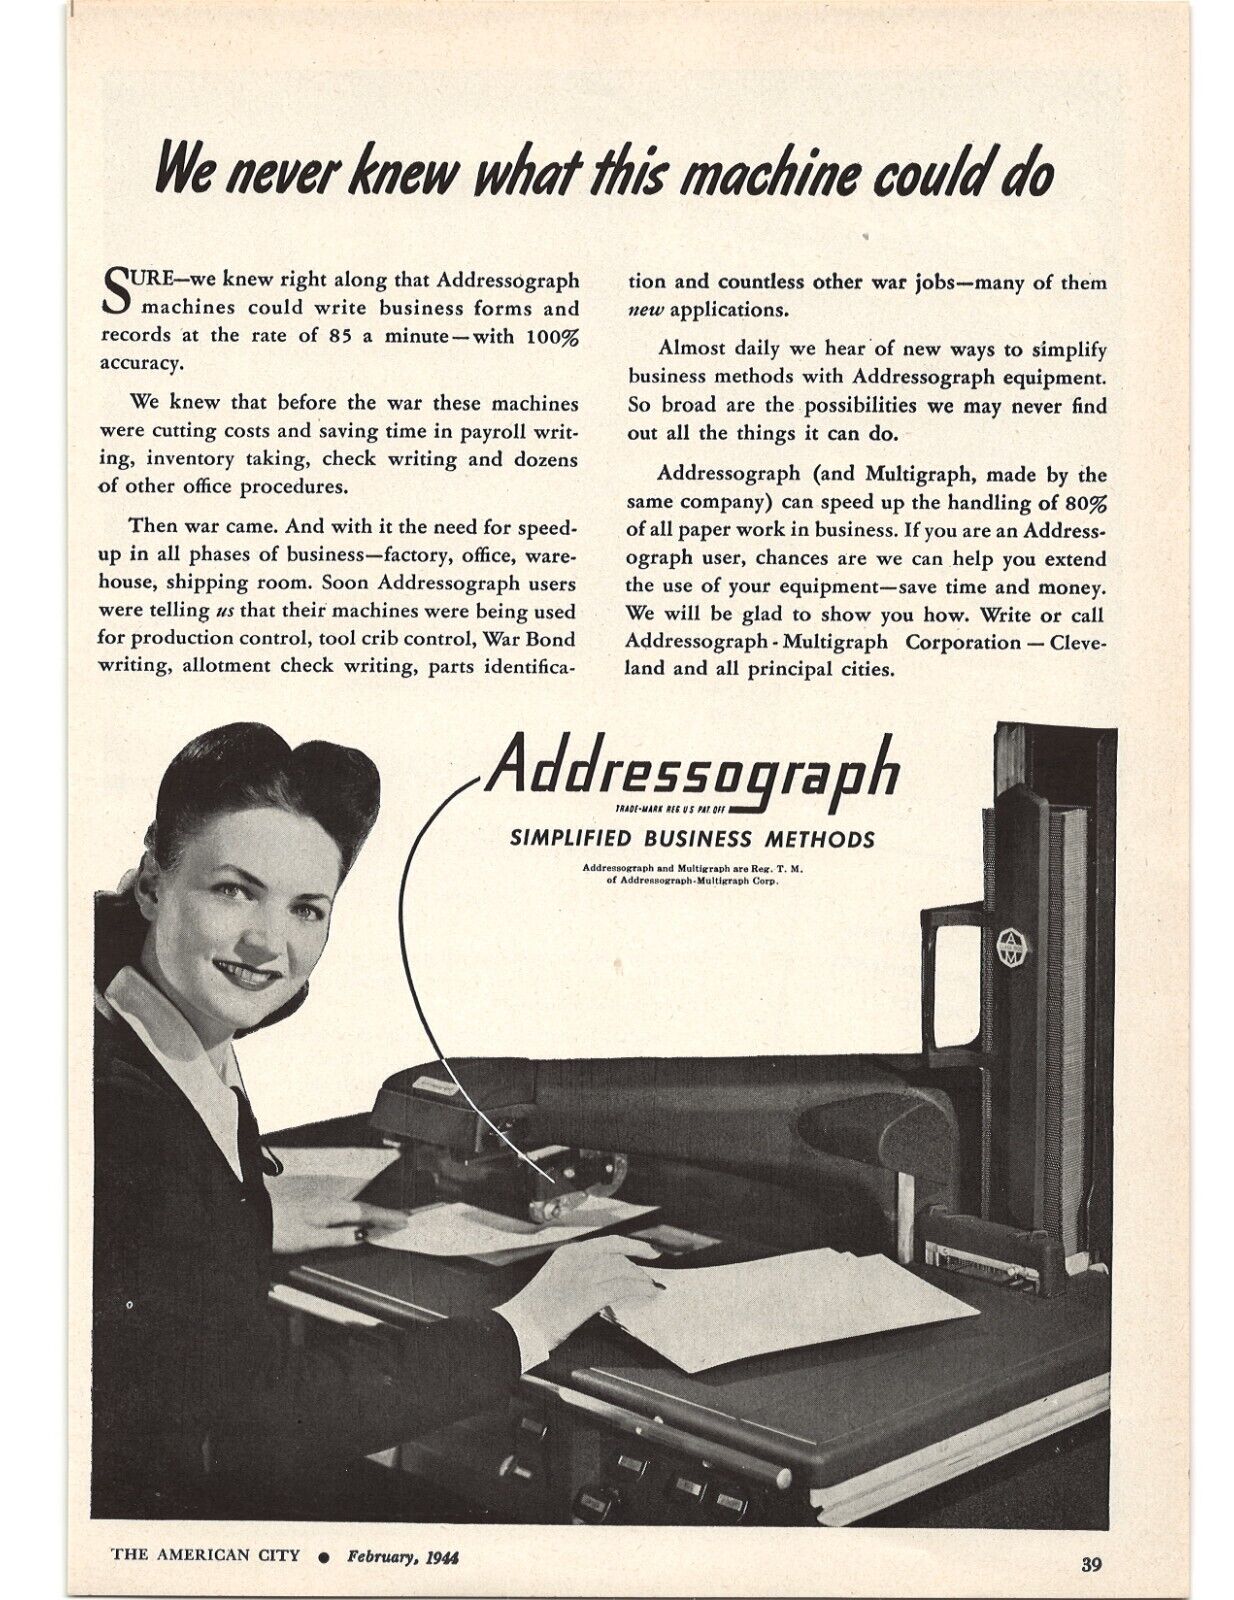 1944 ADDRESSOGRAPH SIMPLIFIED BUSINESS METHODS VINTAGE PHOTO ART AD